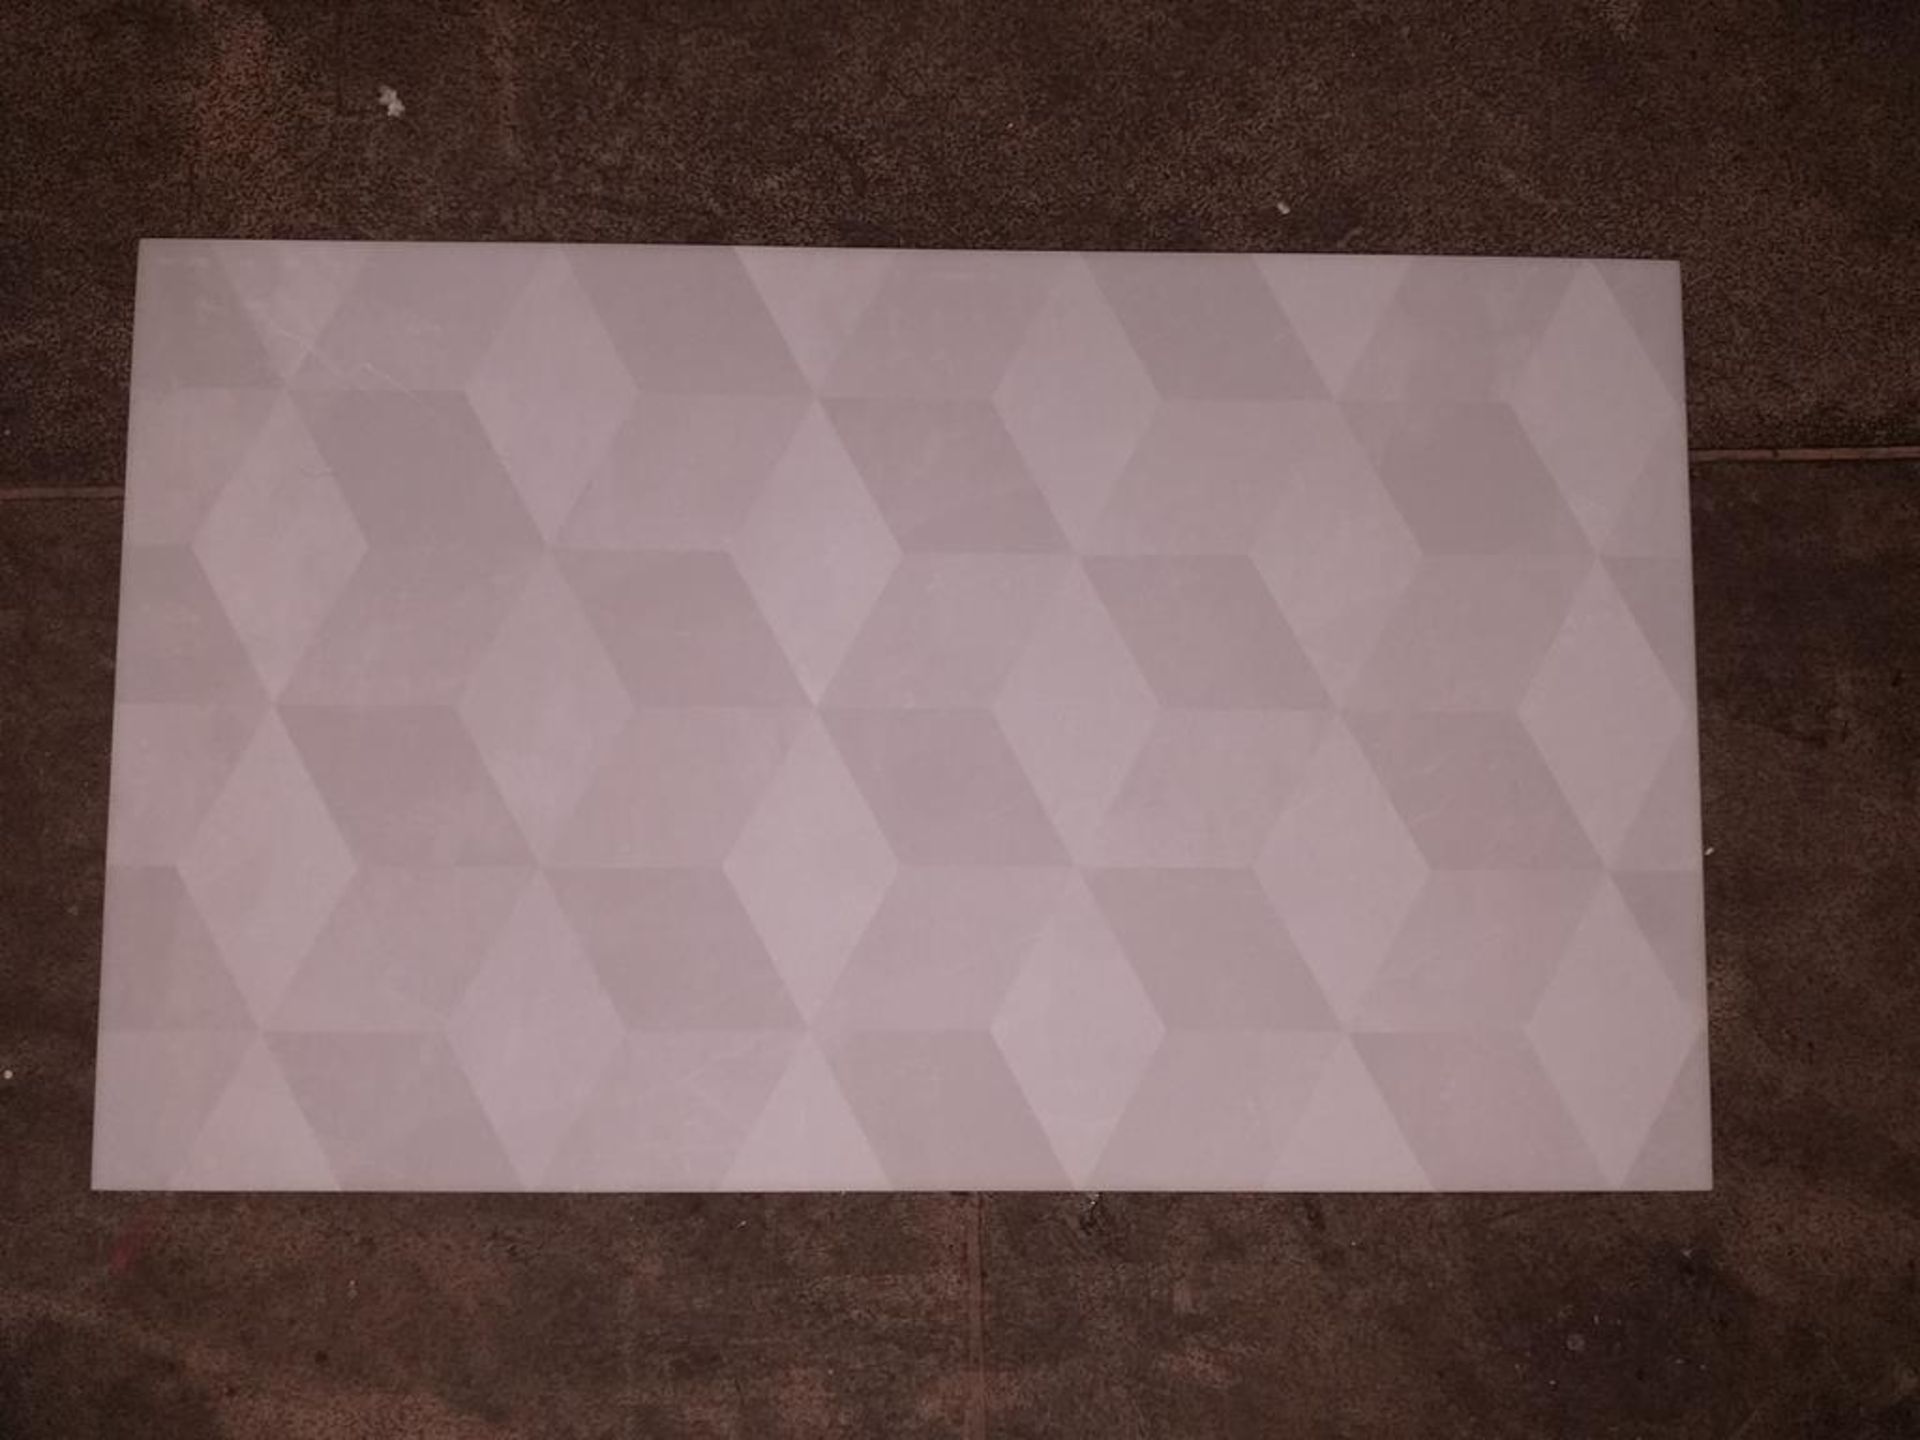 Arlington Marble Cuboid Mist Stone Effect Wall & Floor Tiles - Image 2 of 4